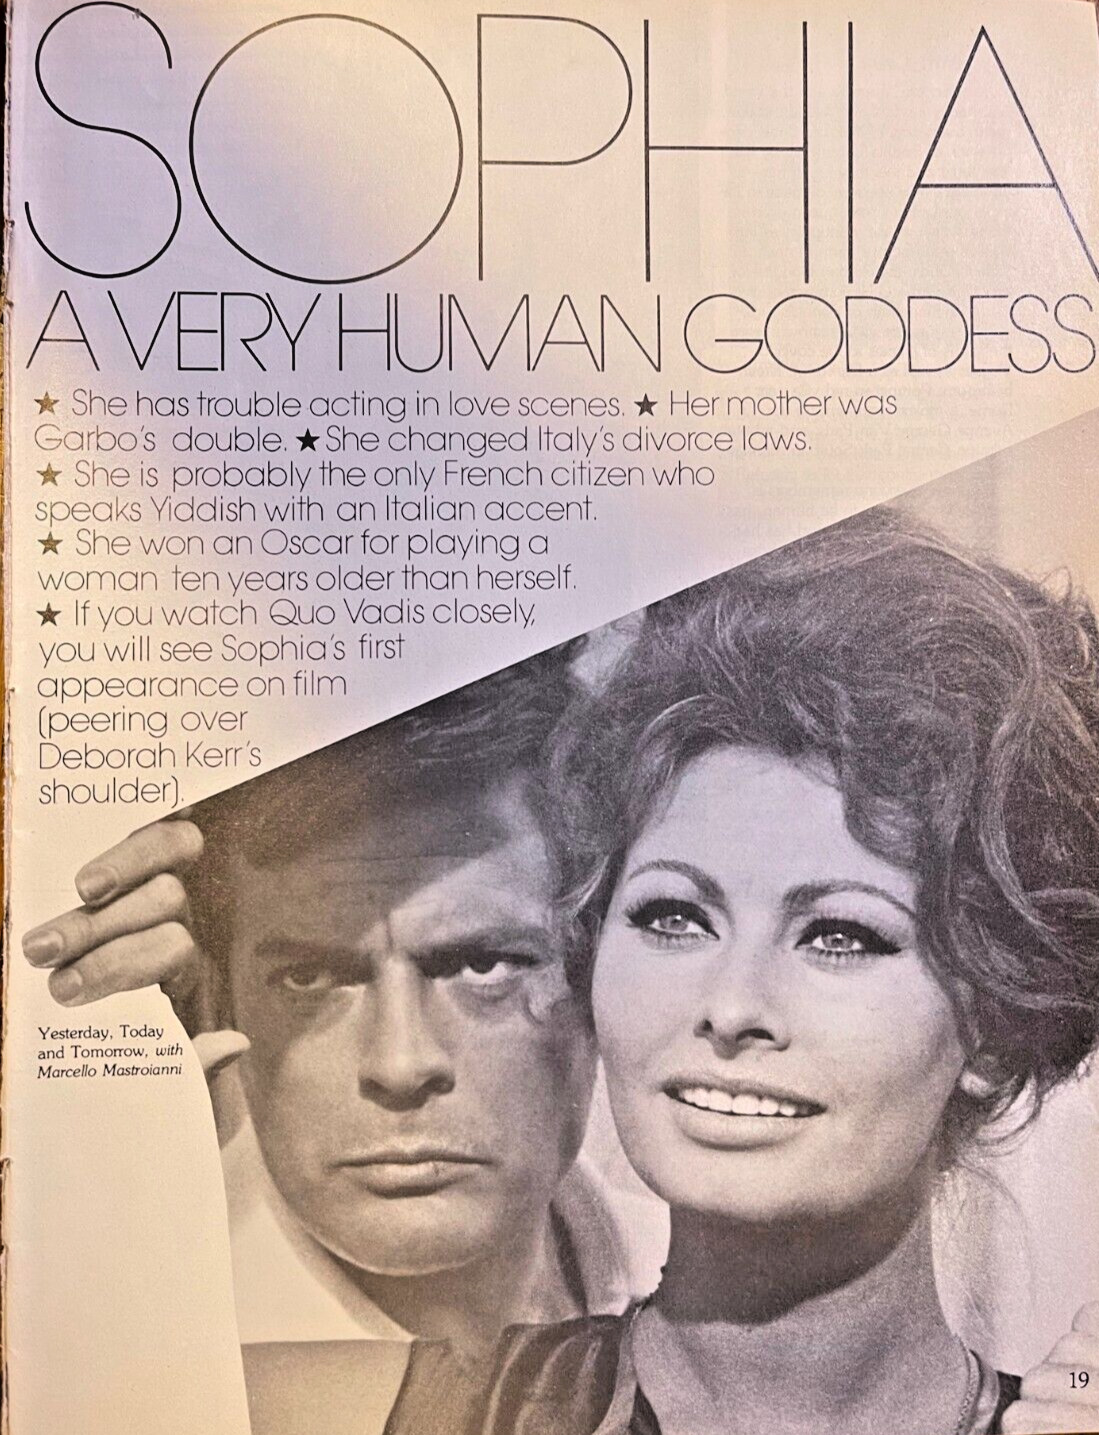 1977 Actress Sophia Loren illustrated